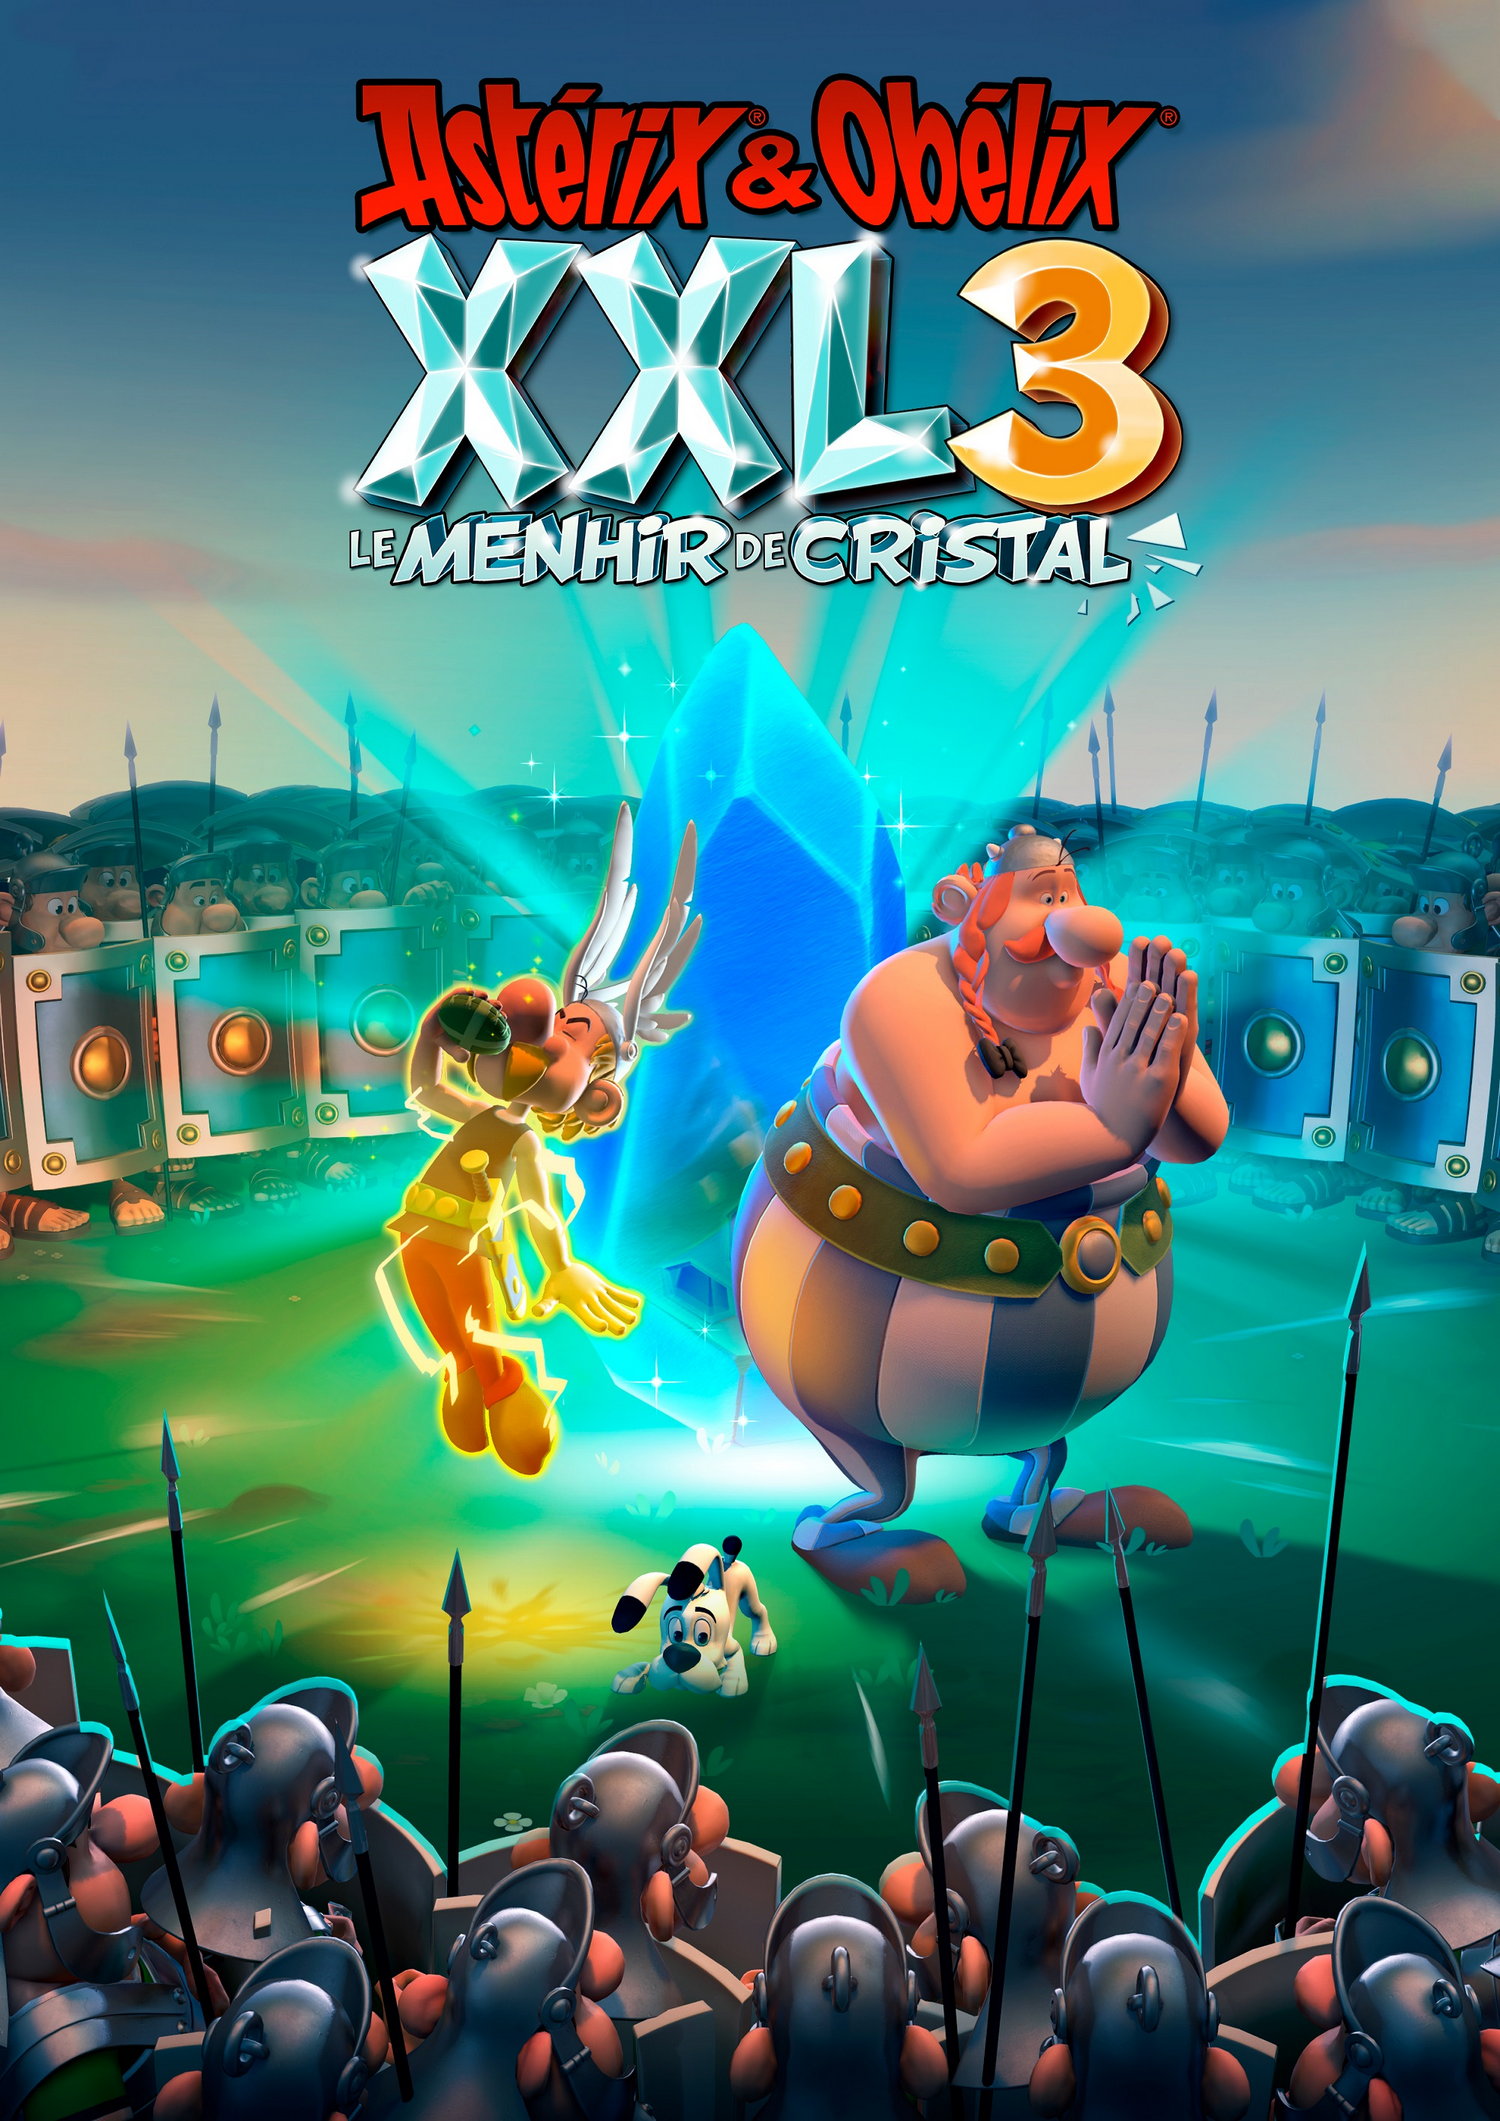 Asterix & Obelix XXL3: The Crystal Menhir, постер № 2